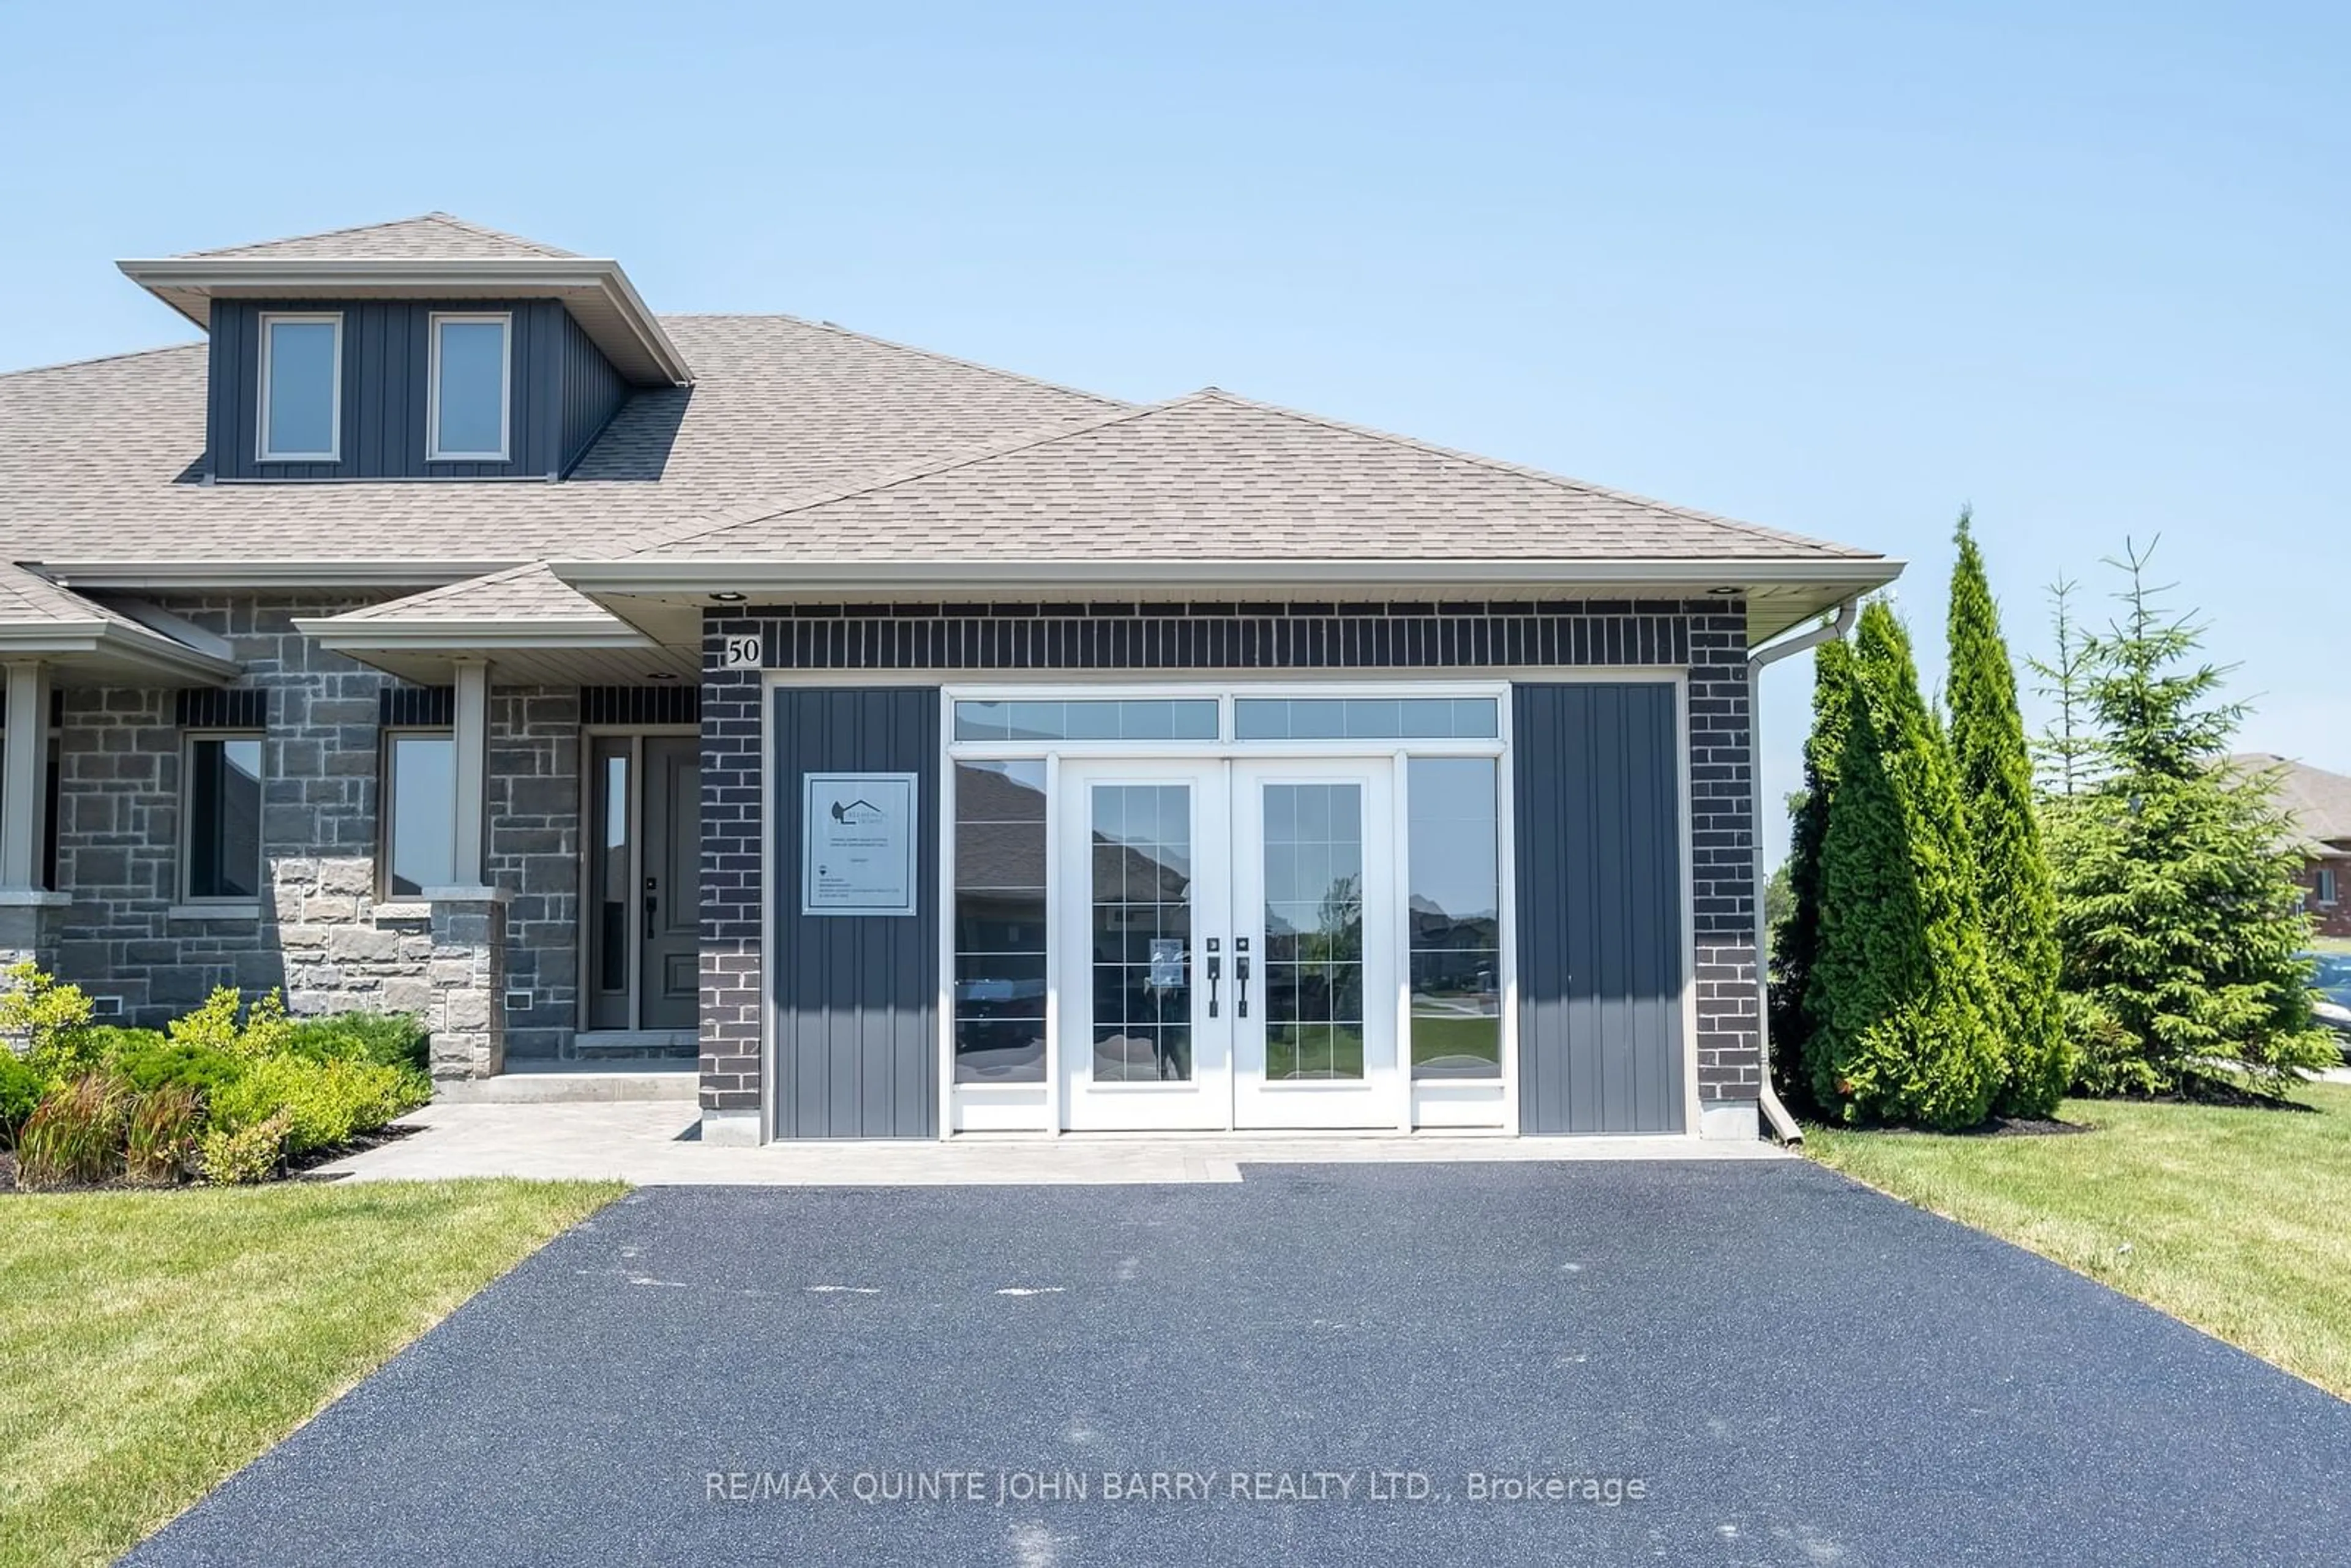 Home with brick exterior material for 50 Hillside Meadow Dr, Quinte West Ontario K8V 0J6